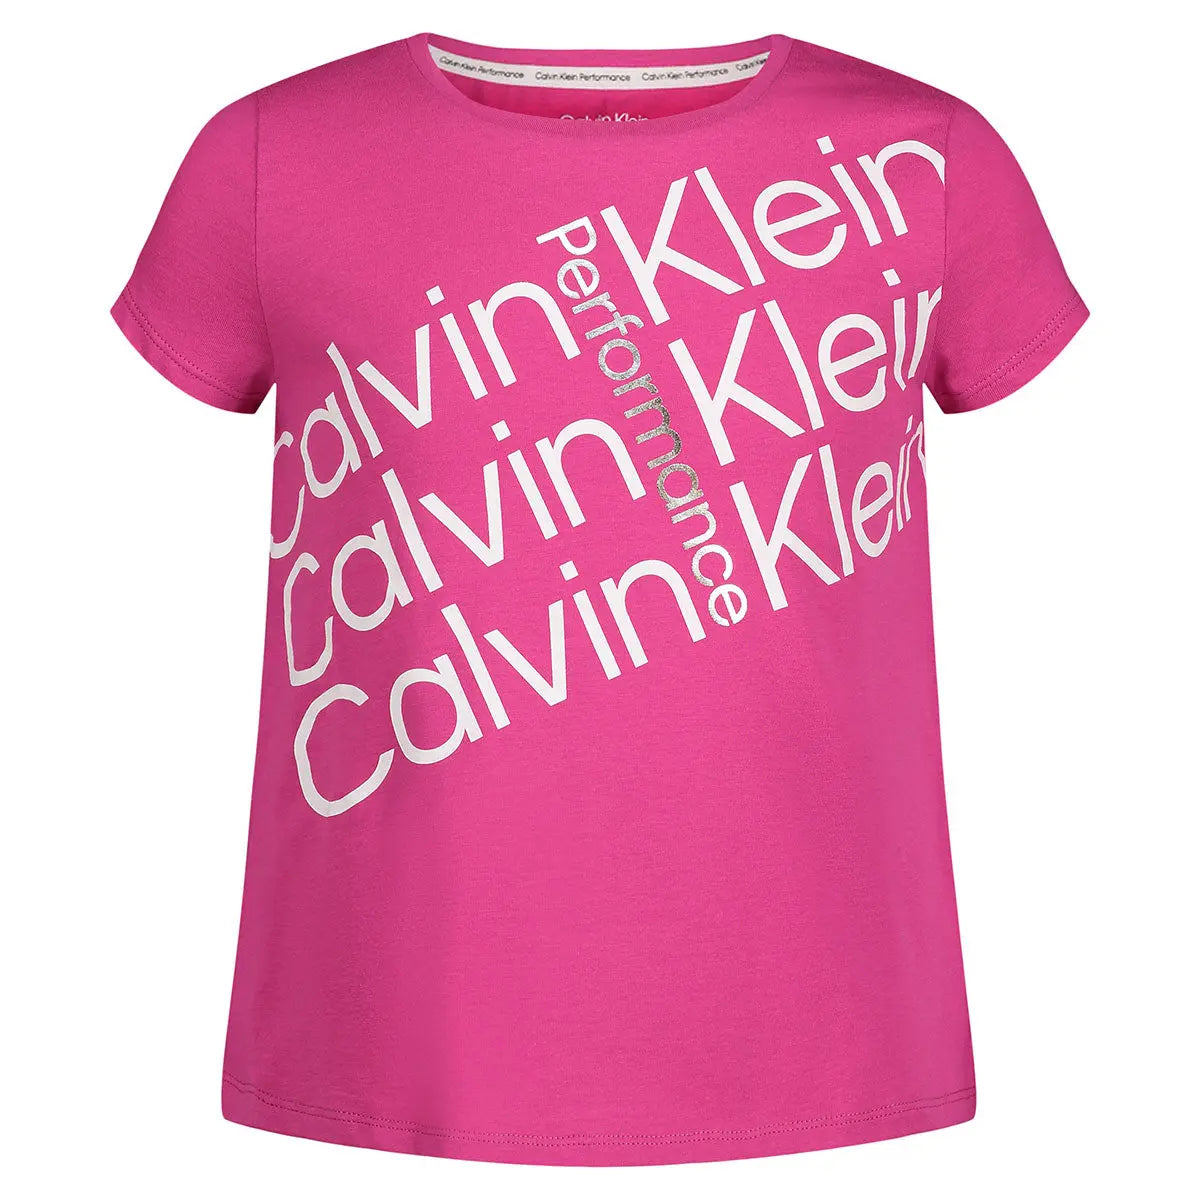 Pink 'T - ANGIE' T - Fila MEN ACTIVEWEAR tops & t-shirts - GenesinlifeShops  GB - shirt with logo Diesel